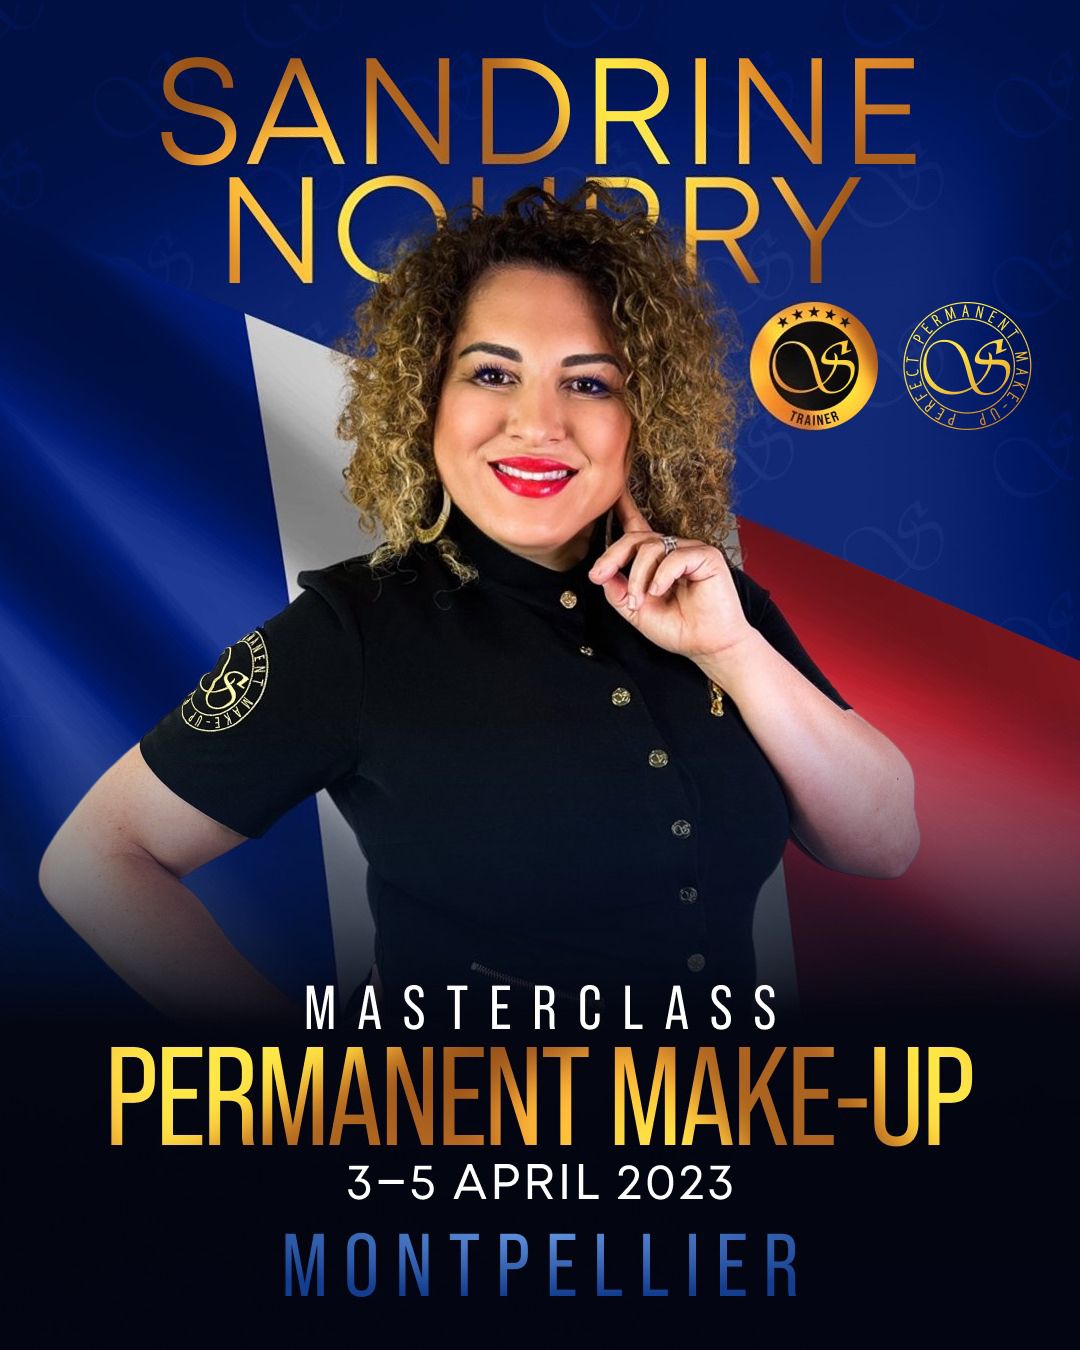 Formation Masterclass Maquillage permanent à Montpellier avril 2023 - Sandrine Nourry Sviatoacademy Trainer